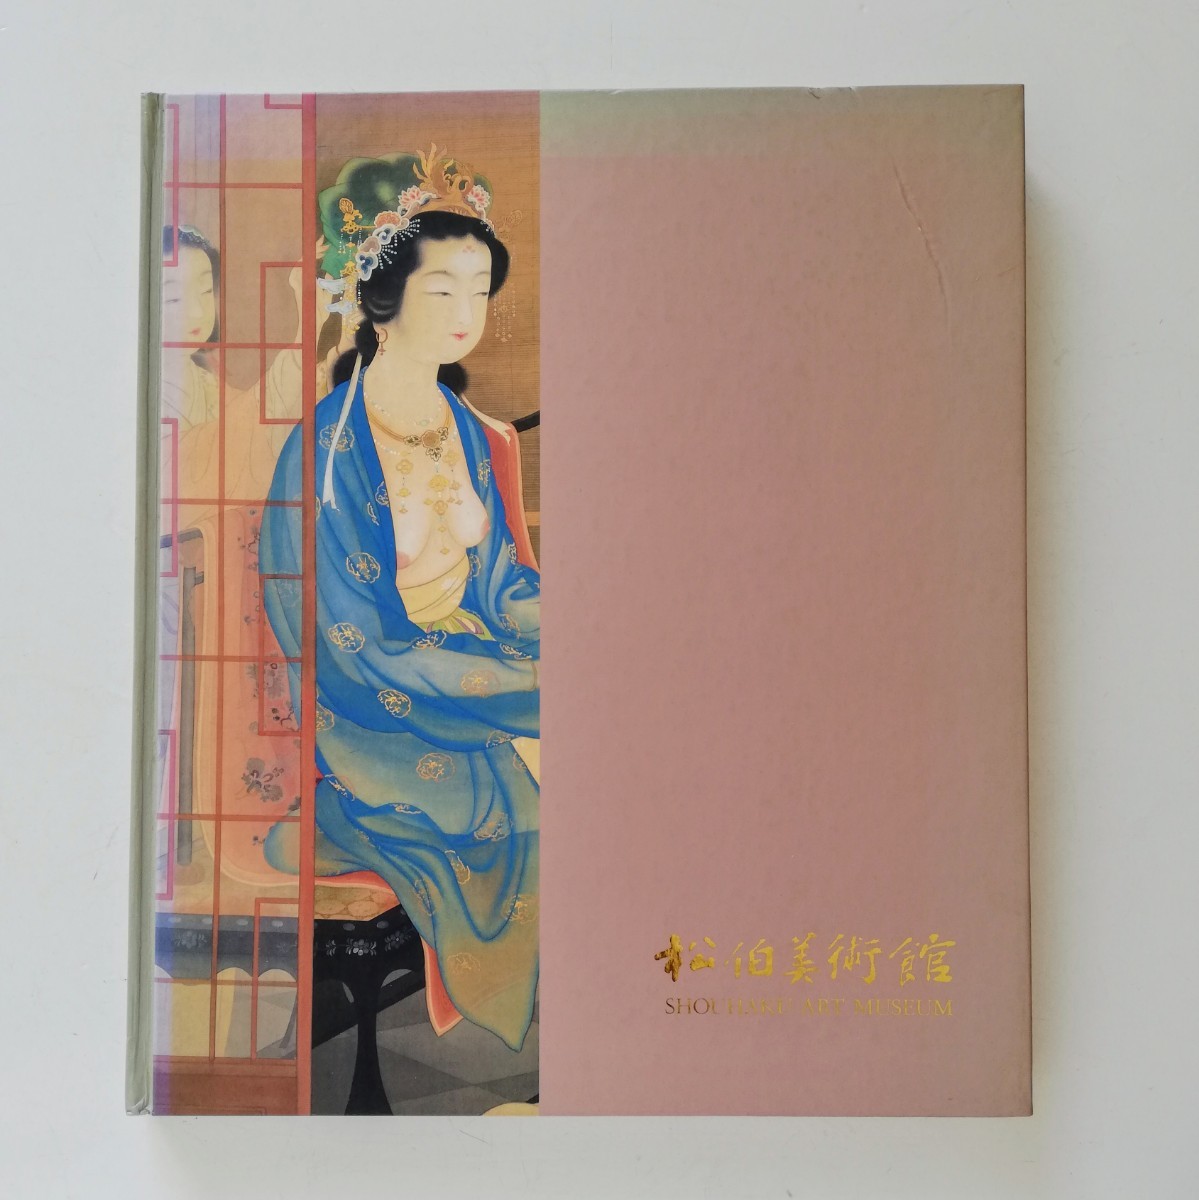 a3. [Katalog] Shohaku Museum of Art - Katalog der Werke im Shohaku Museum of Art - 1994 Herausgegeben vom Shohaku Museum of Art, Malerei, Kunstbuch, Sammlung, Katalog